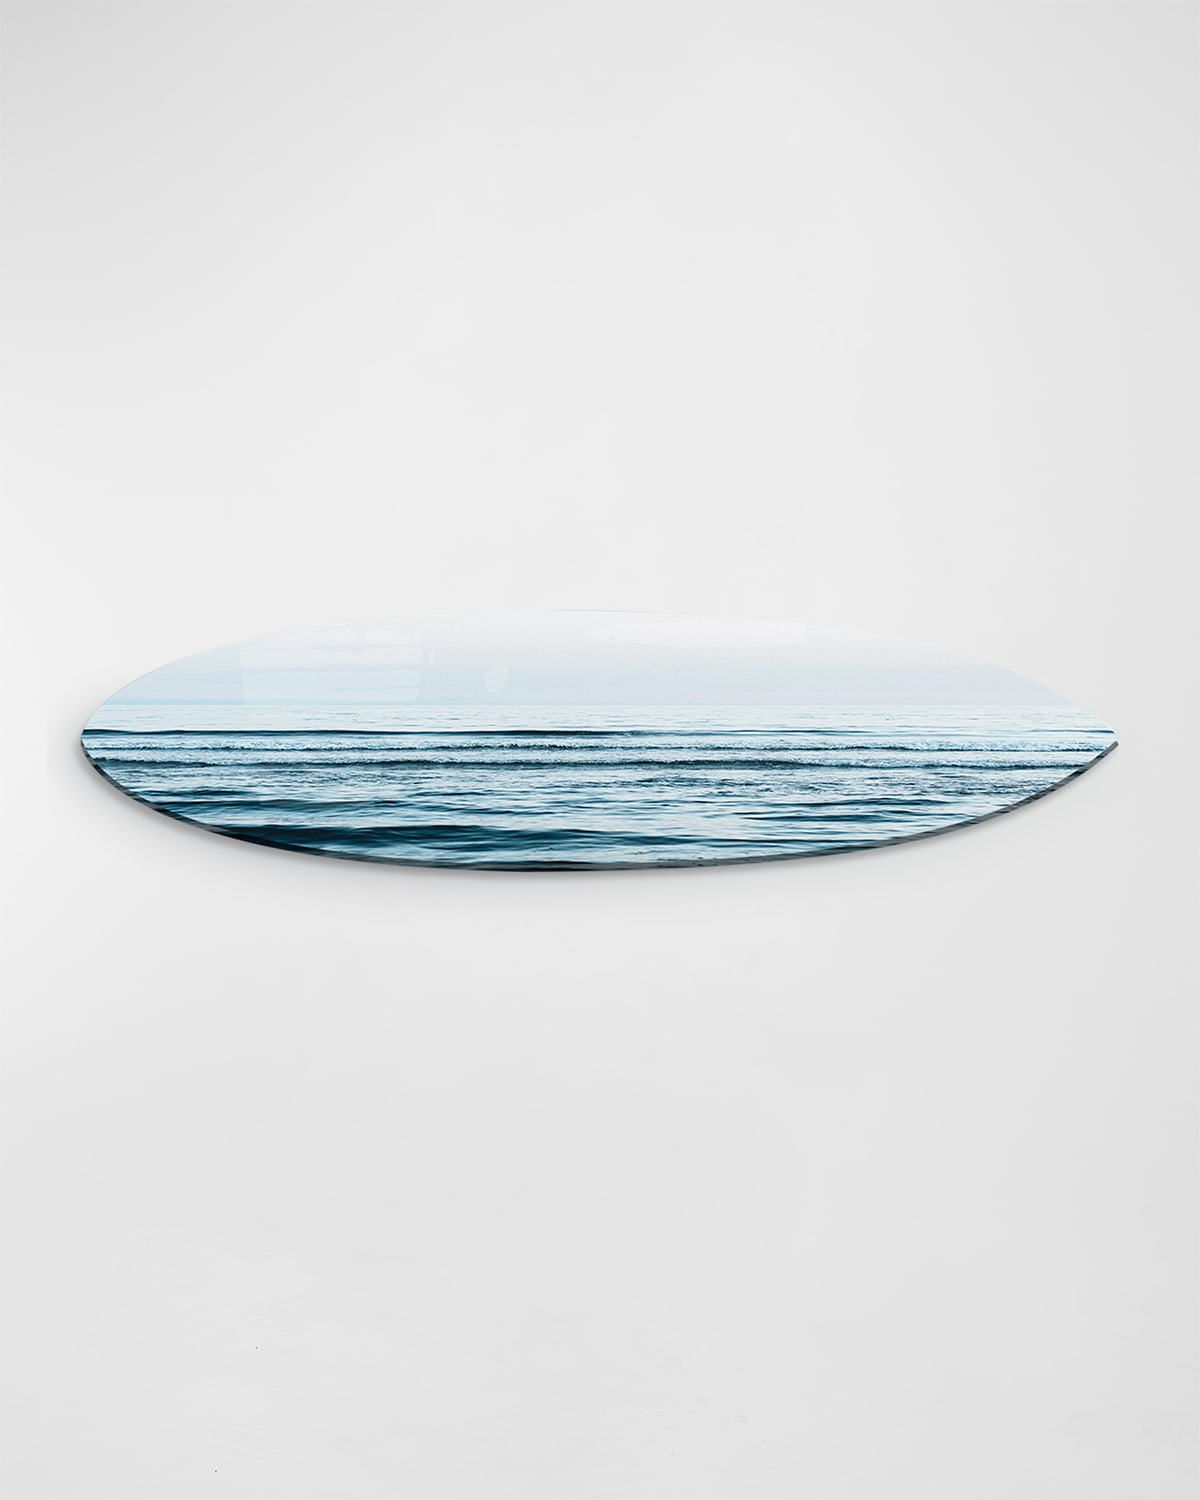 Shop The Oliver Gal Artist Co. Decorative Surfboard Art In Seaside Horizon